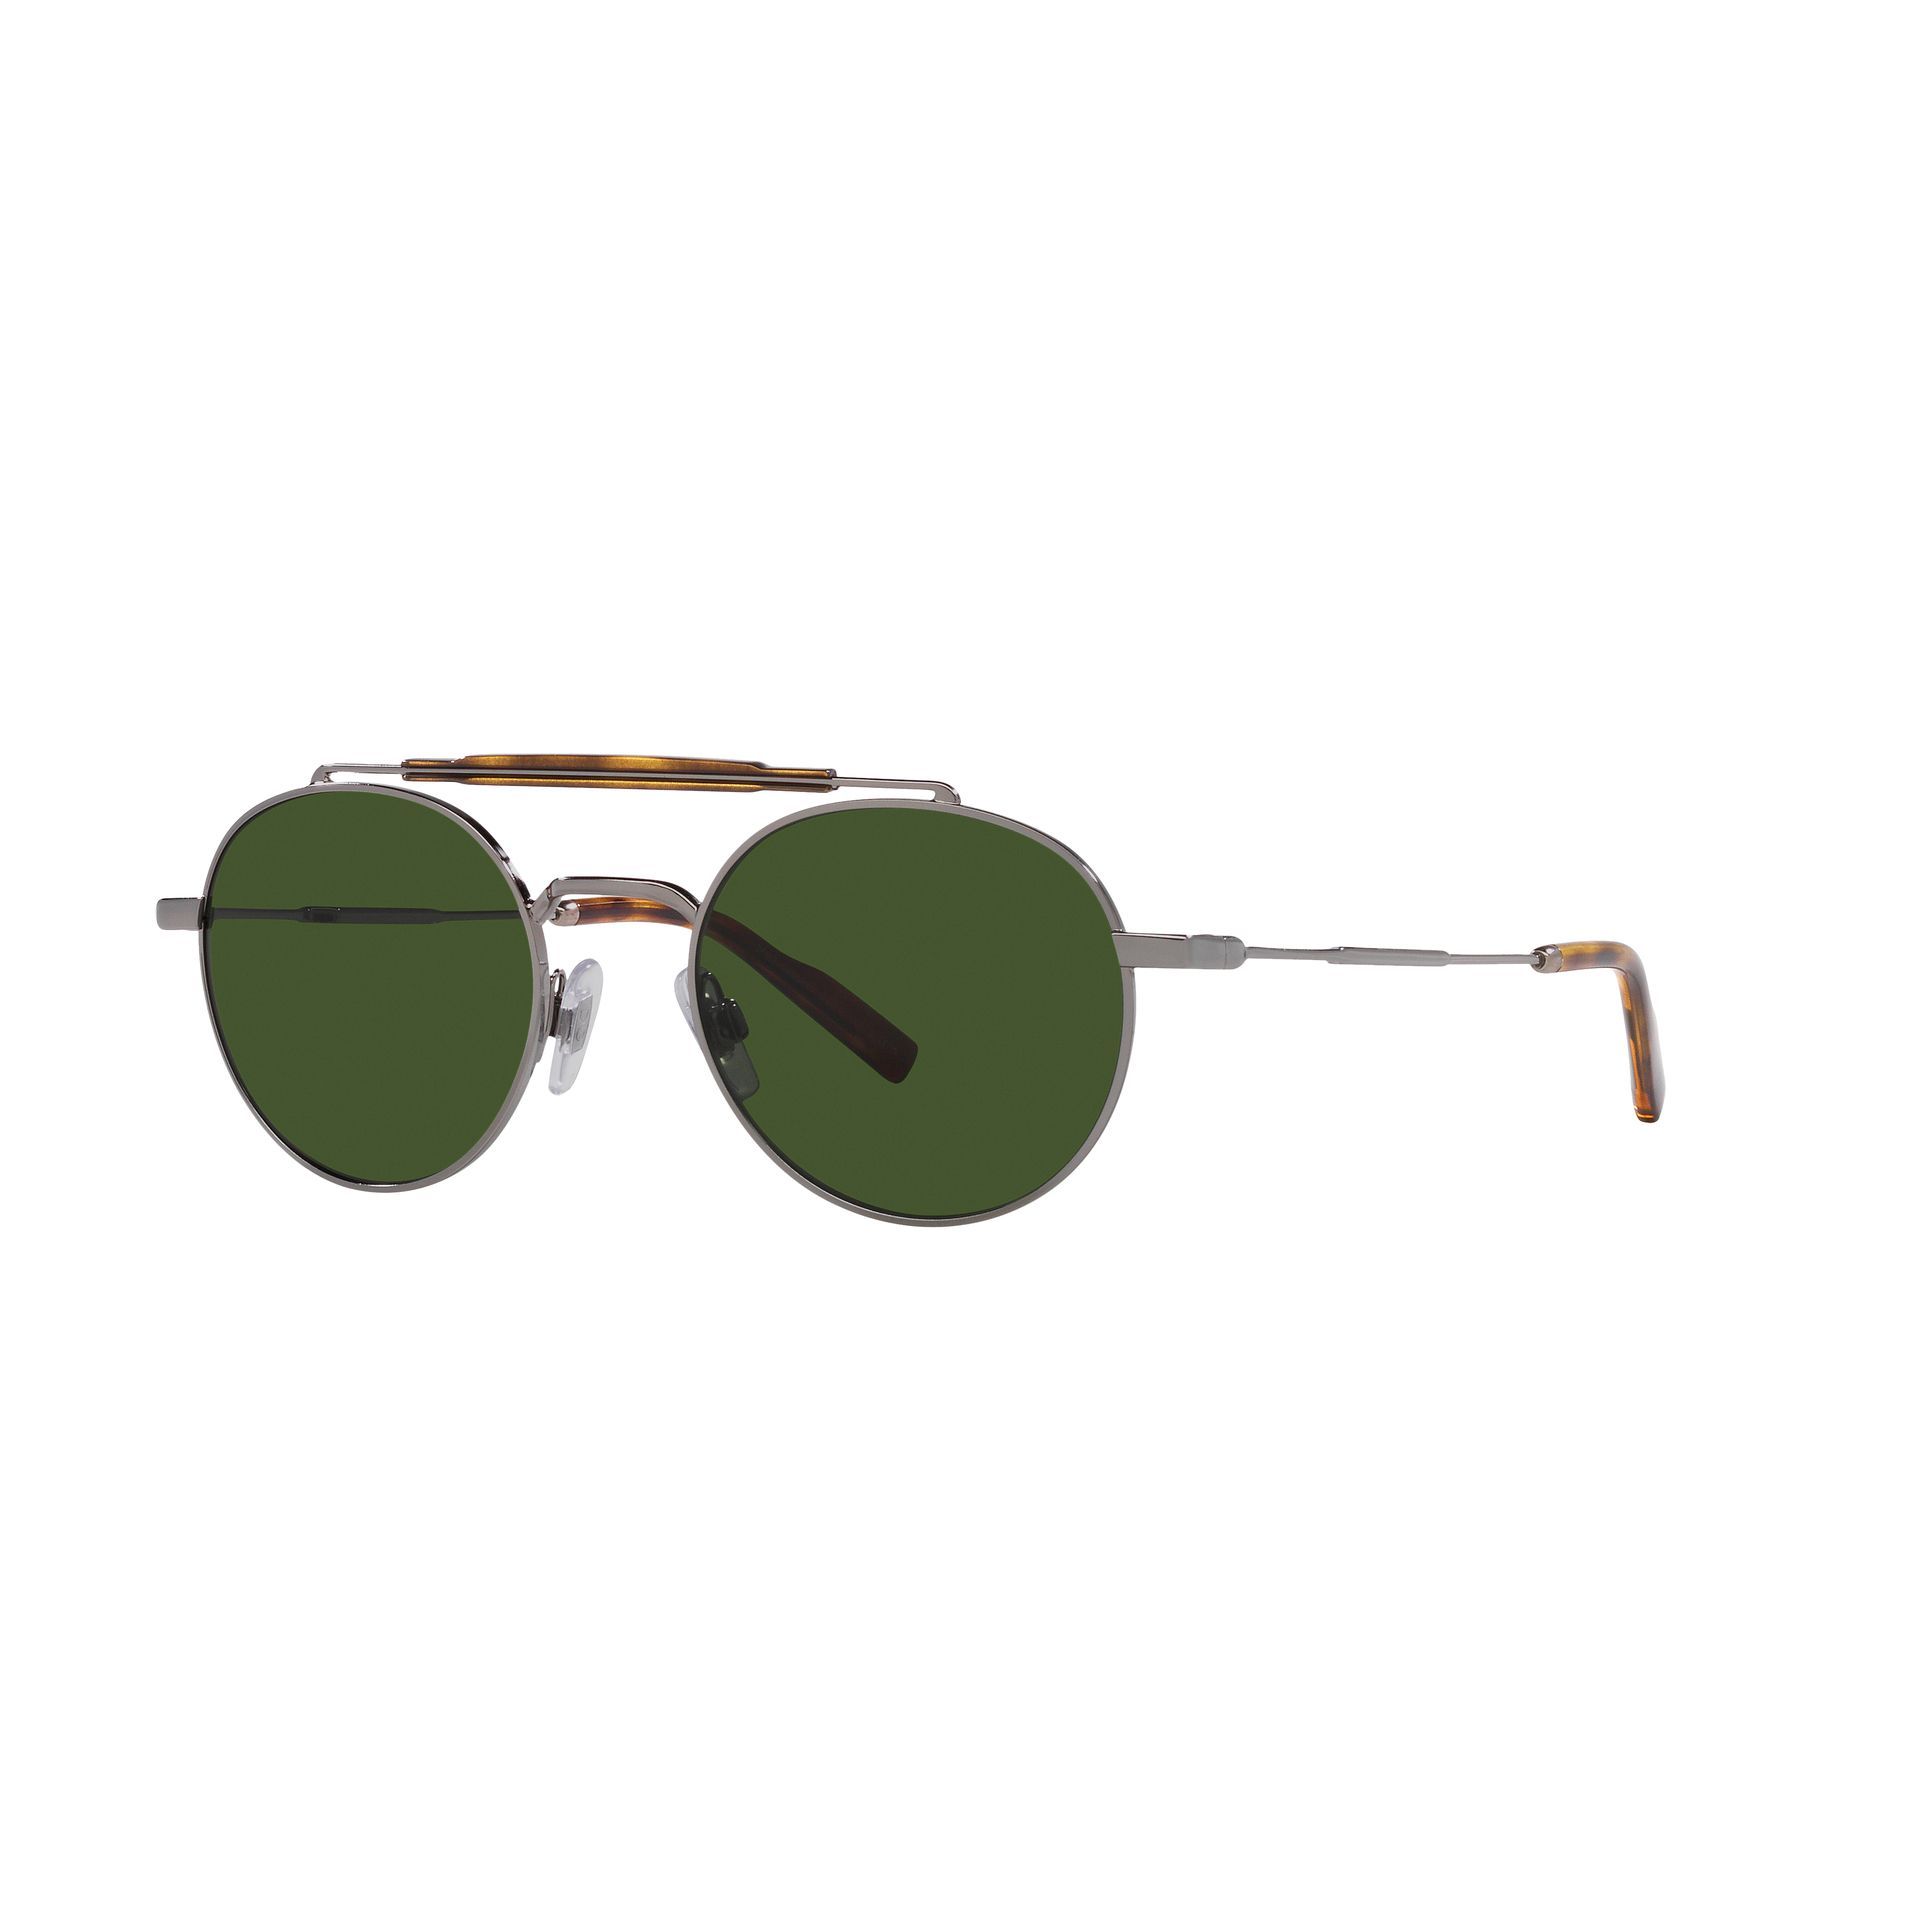 0DG2295 Round Sunglasses 04 71 - size 51